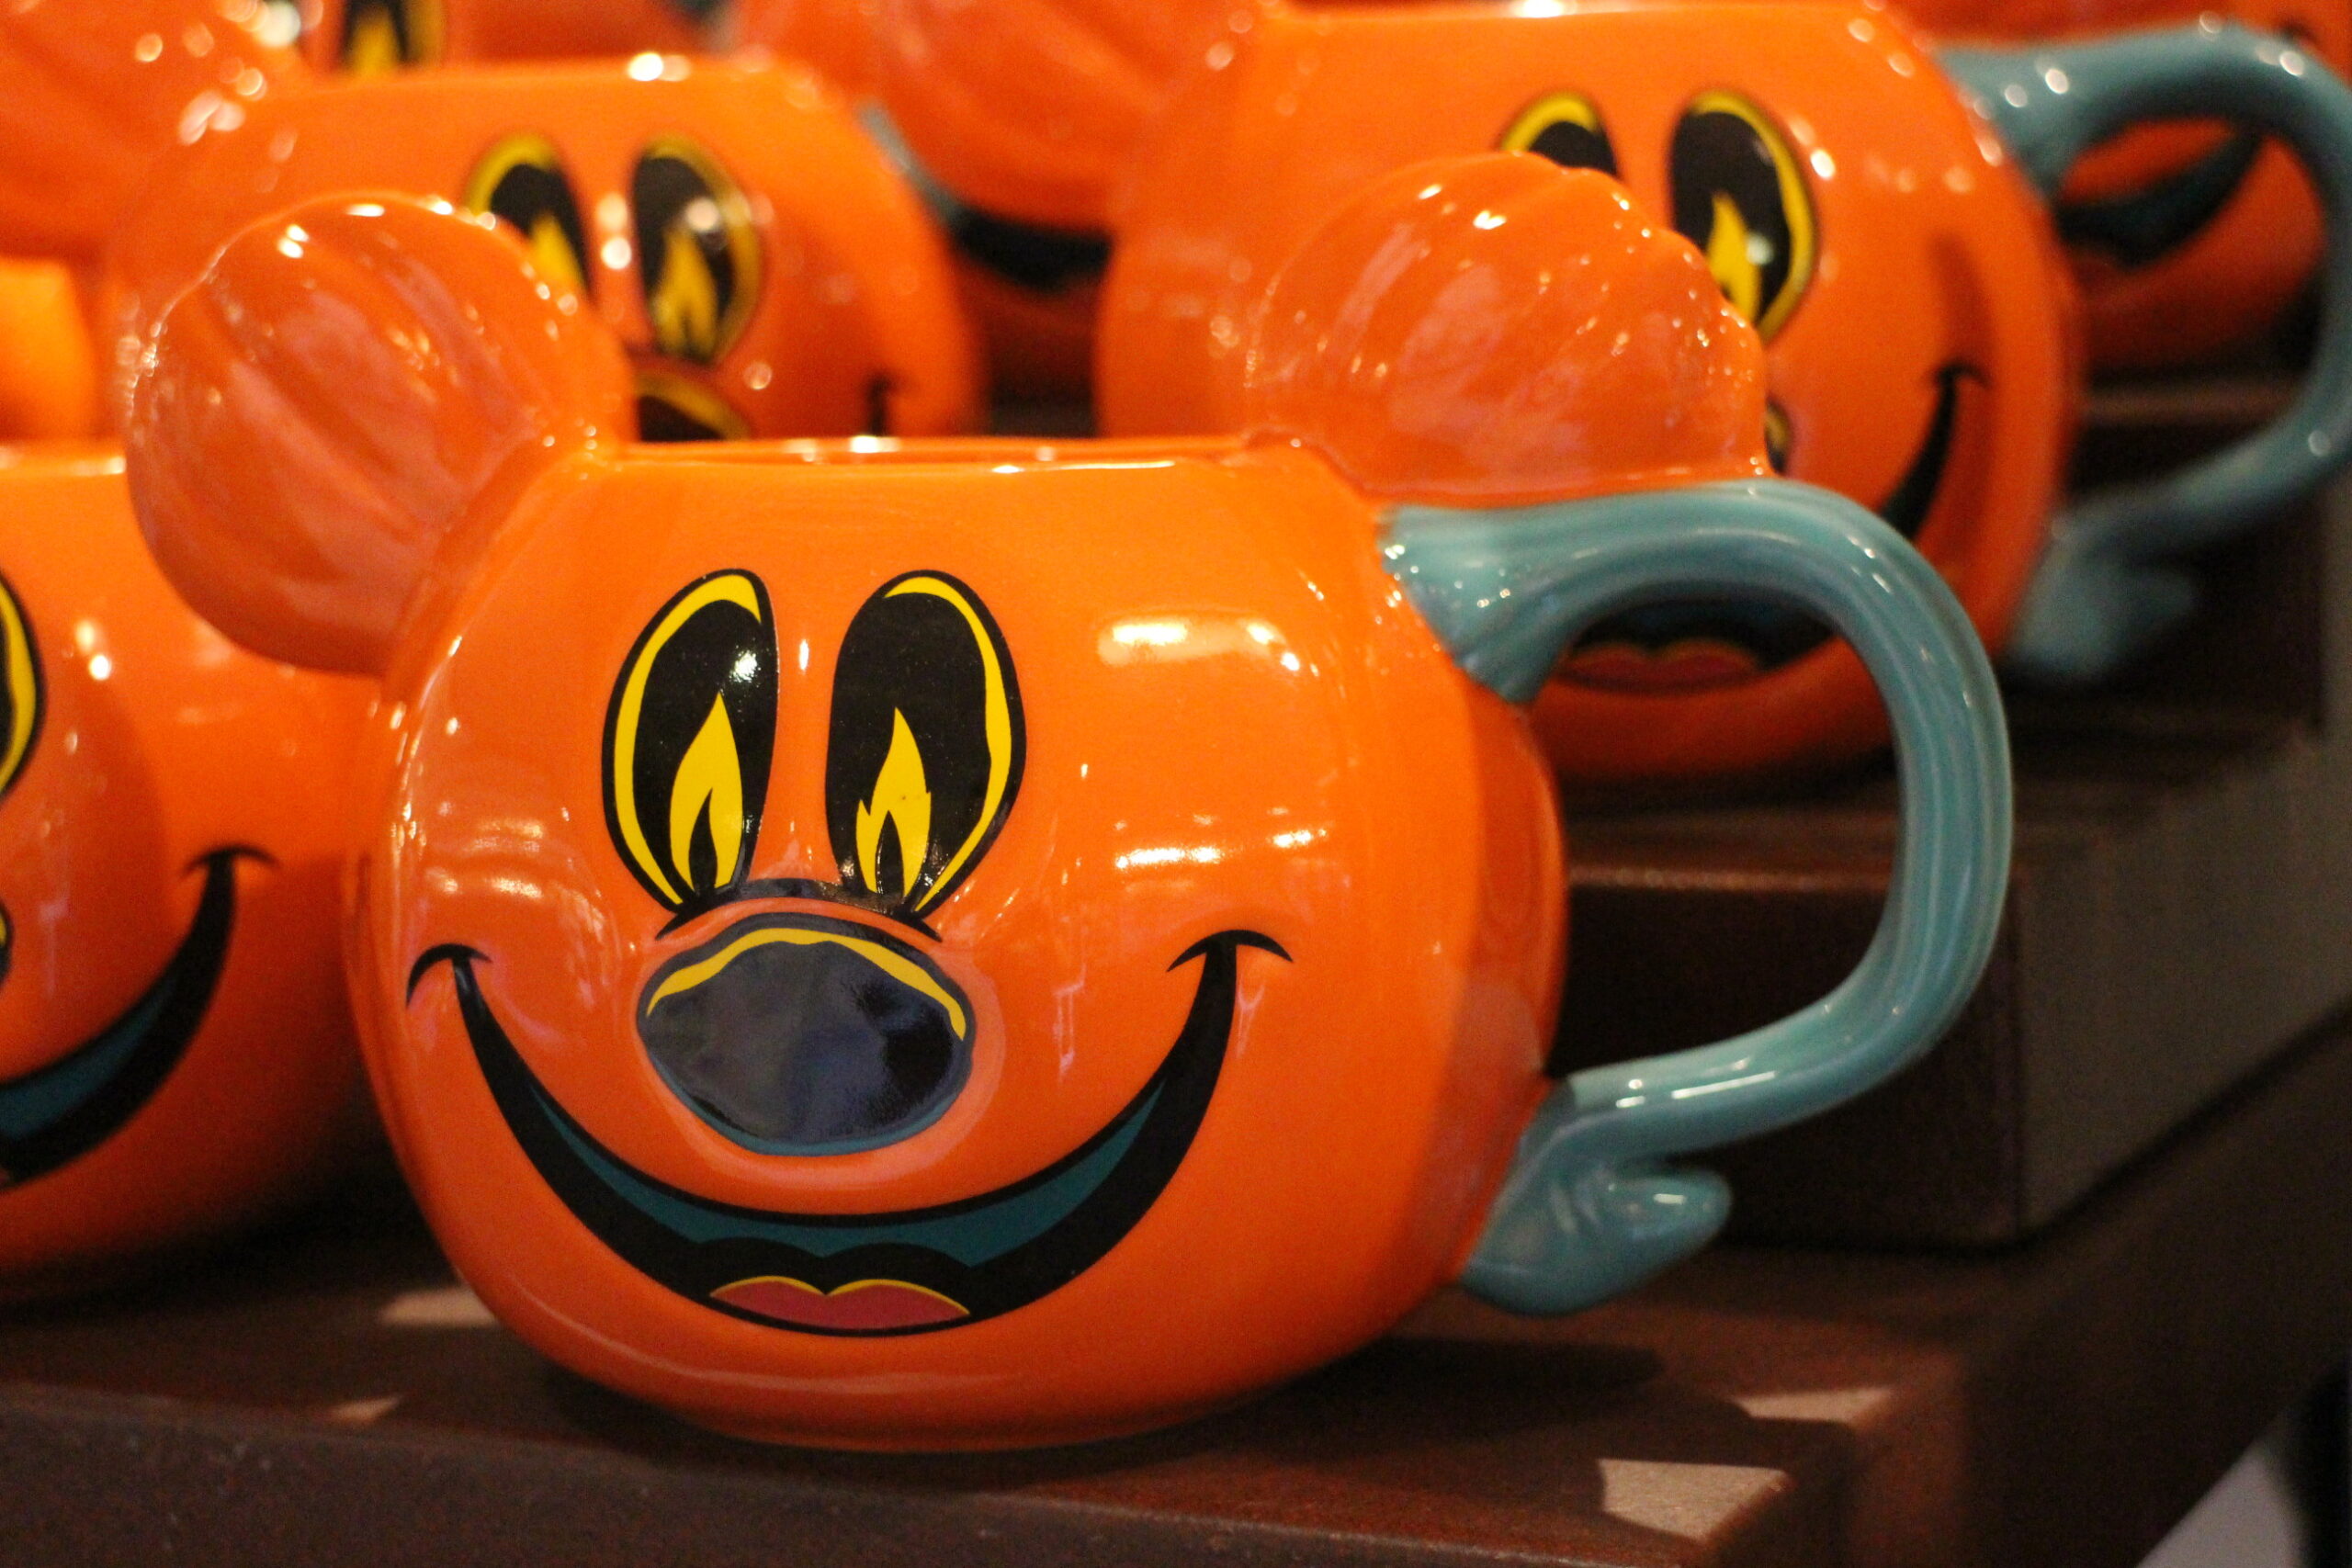 Orange pumpkin mug with Mickey's face on it